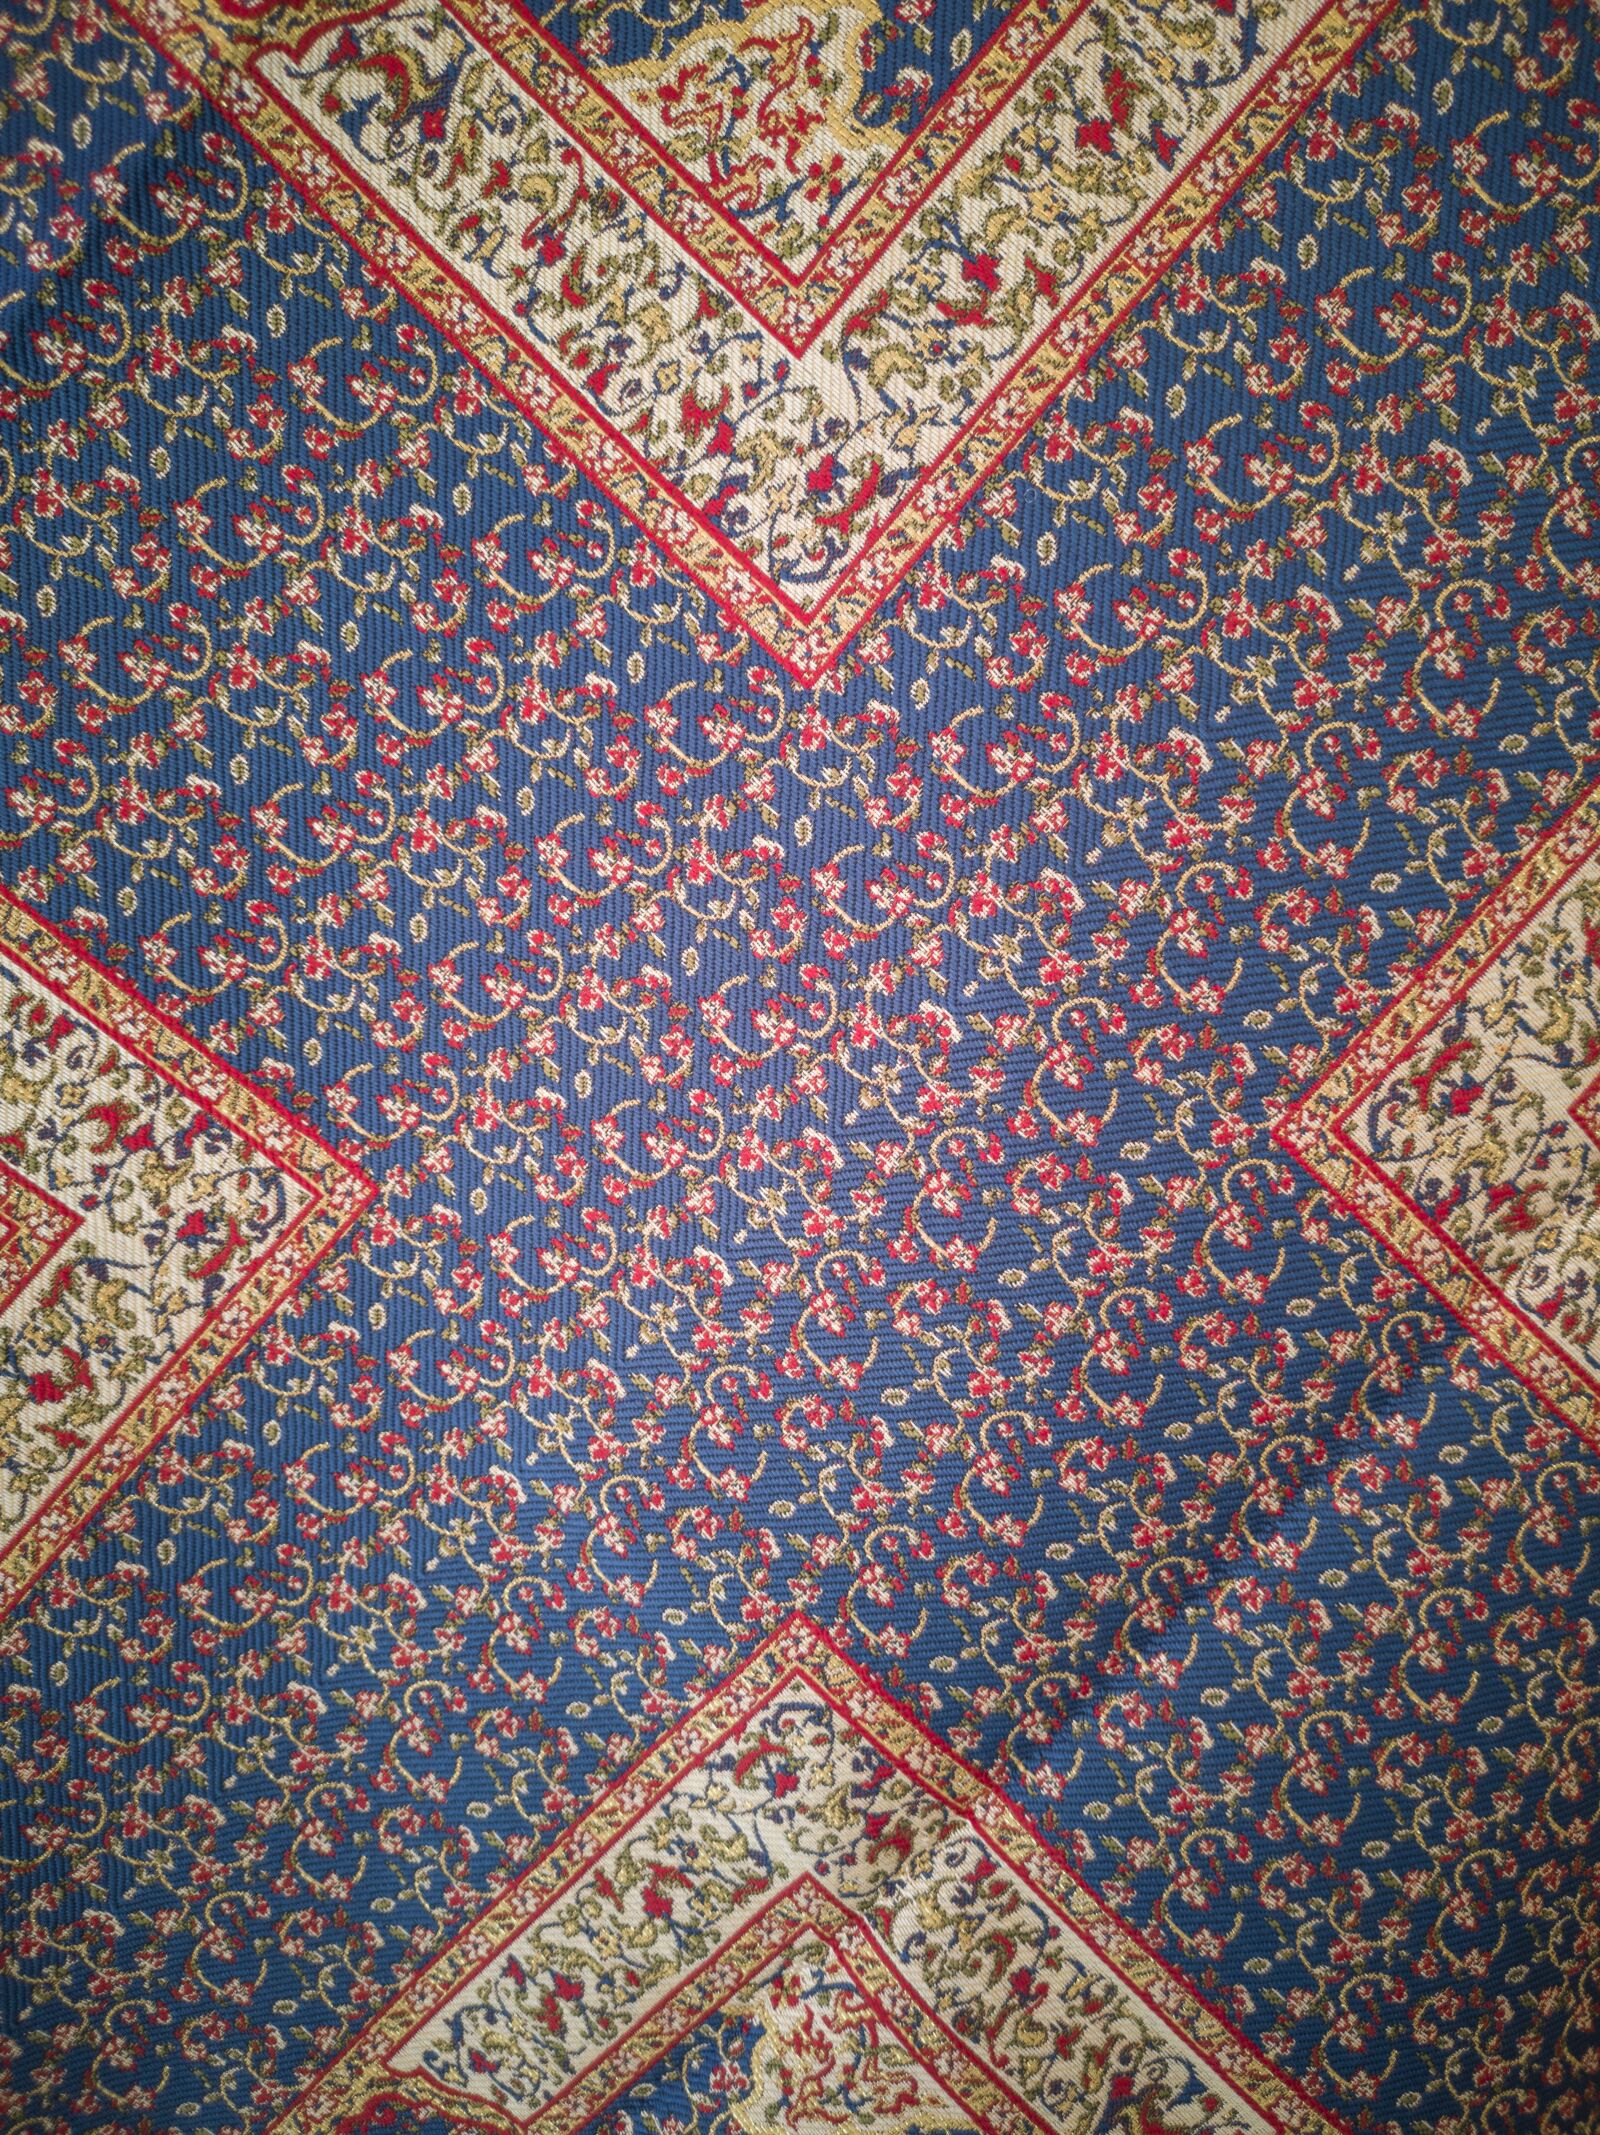 HUAWEI CLT-L09 sample photo. Carpet, pattern, macro photography